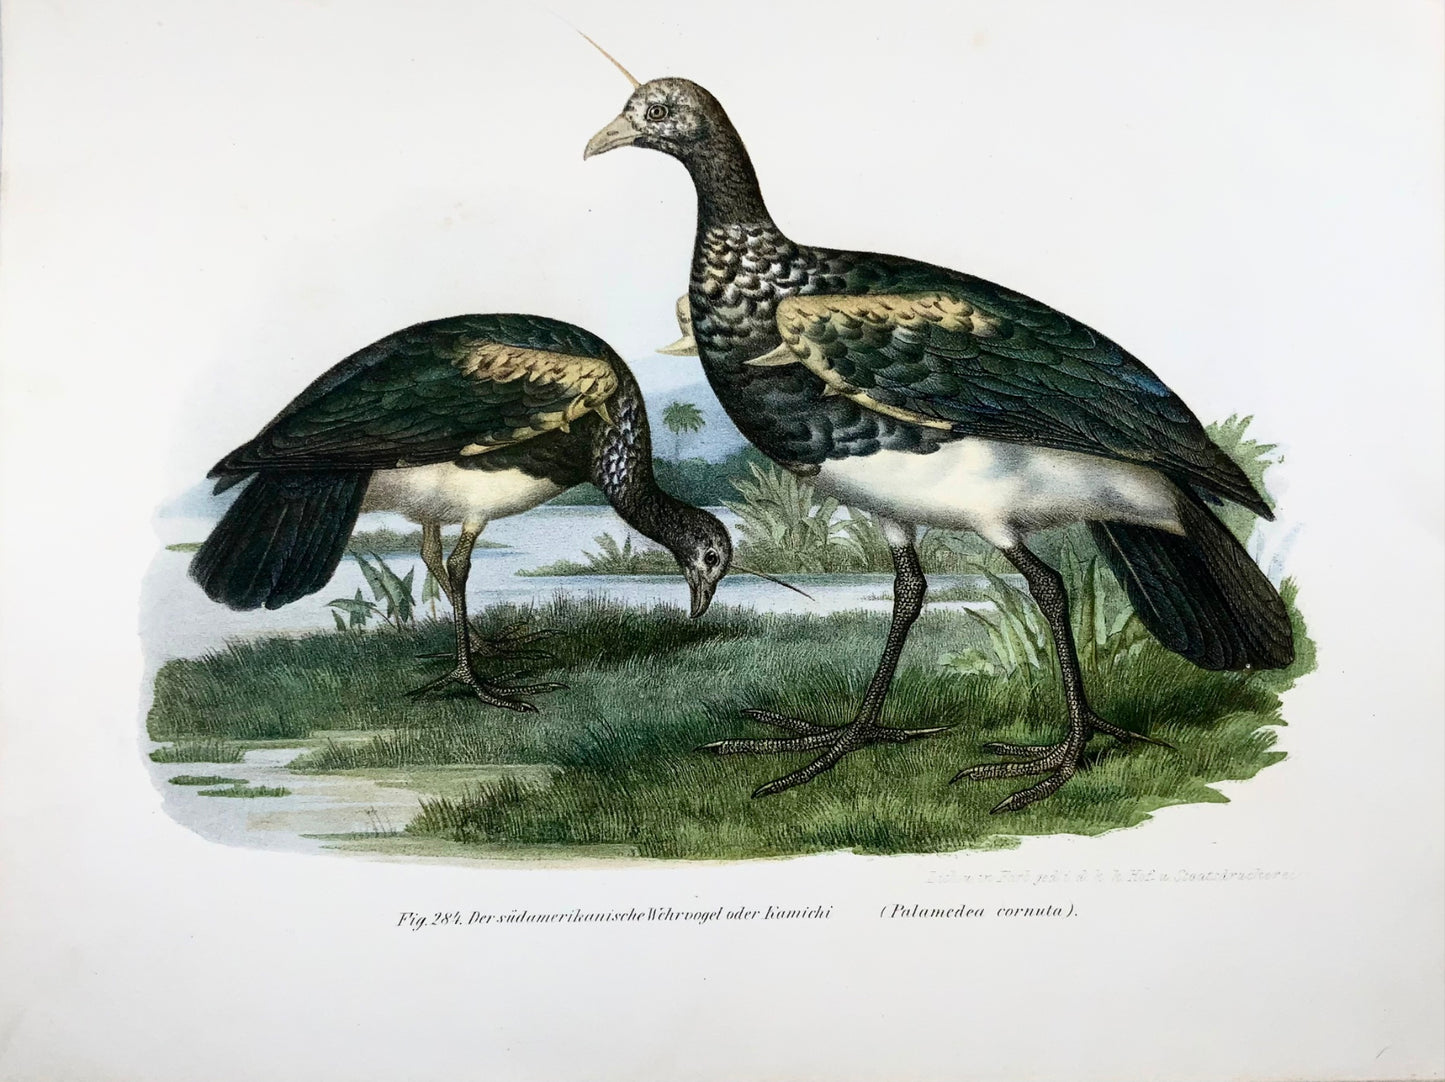 1860 Uccelli urlatori cornuti, Fitzinger, litografia, finitura a mano, ornitologia